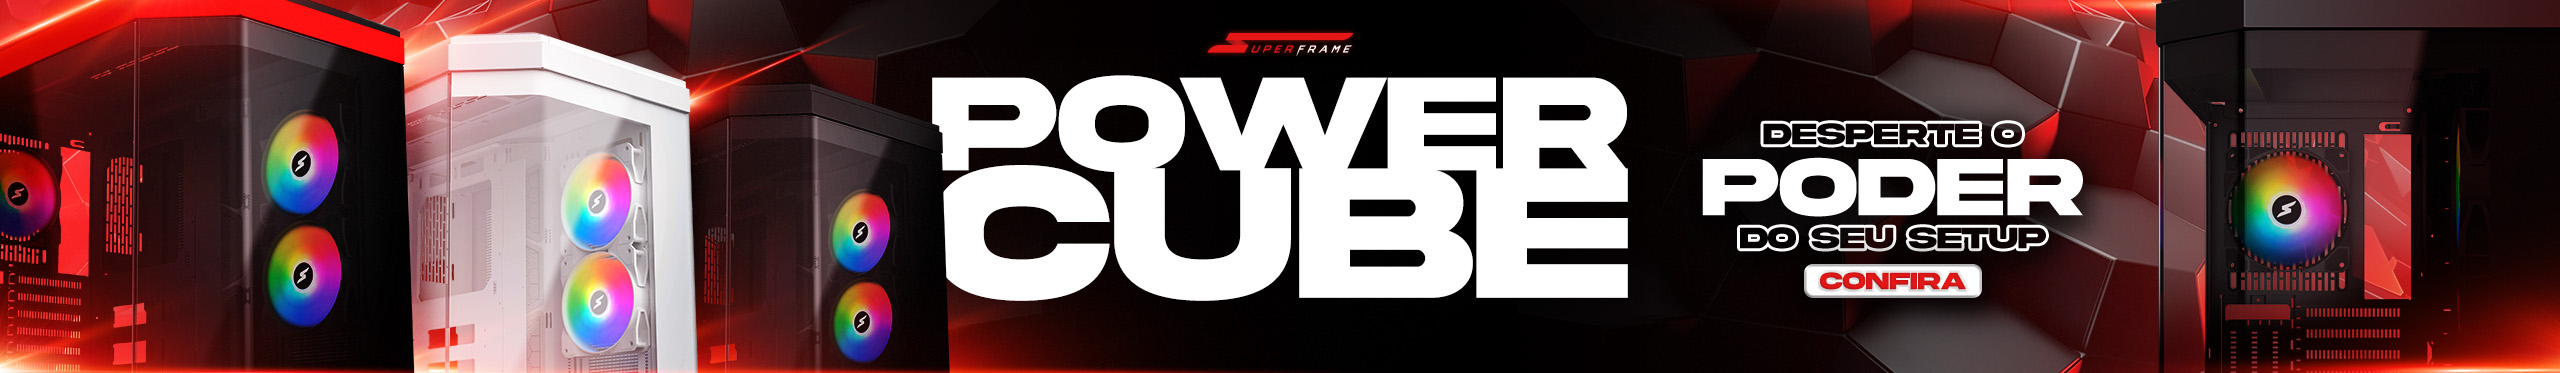 Gabinetes SuperFrame POWER CUBE | Desperte o poder do seu setup. Confira os modelos!